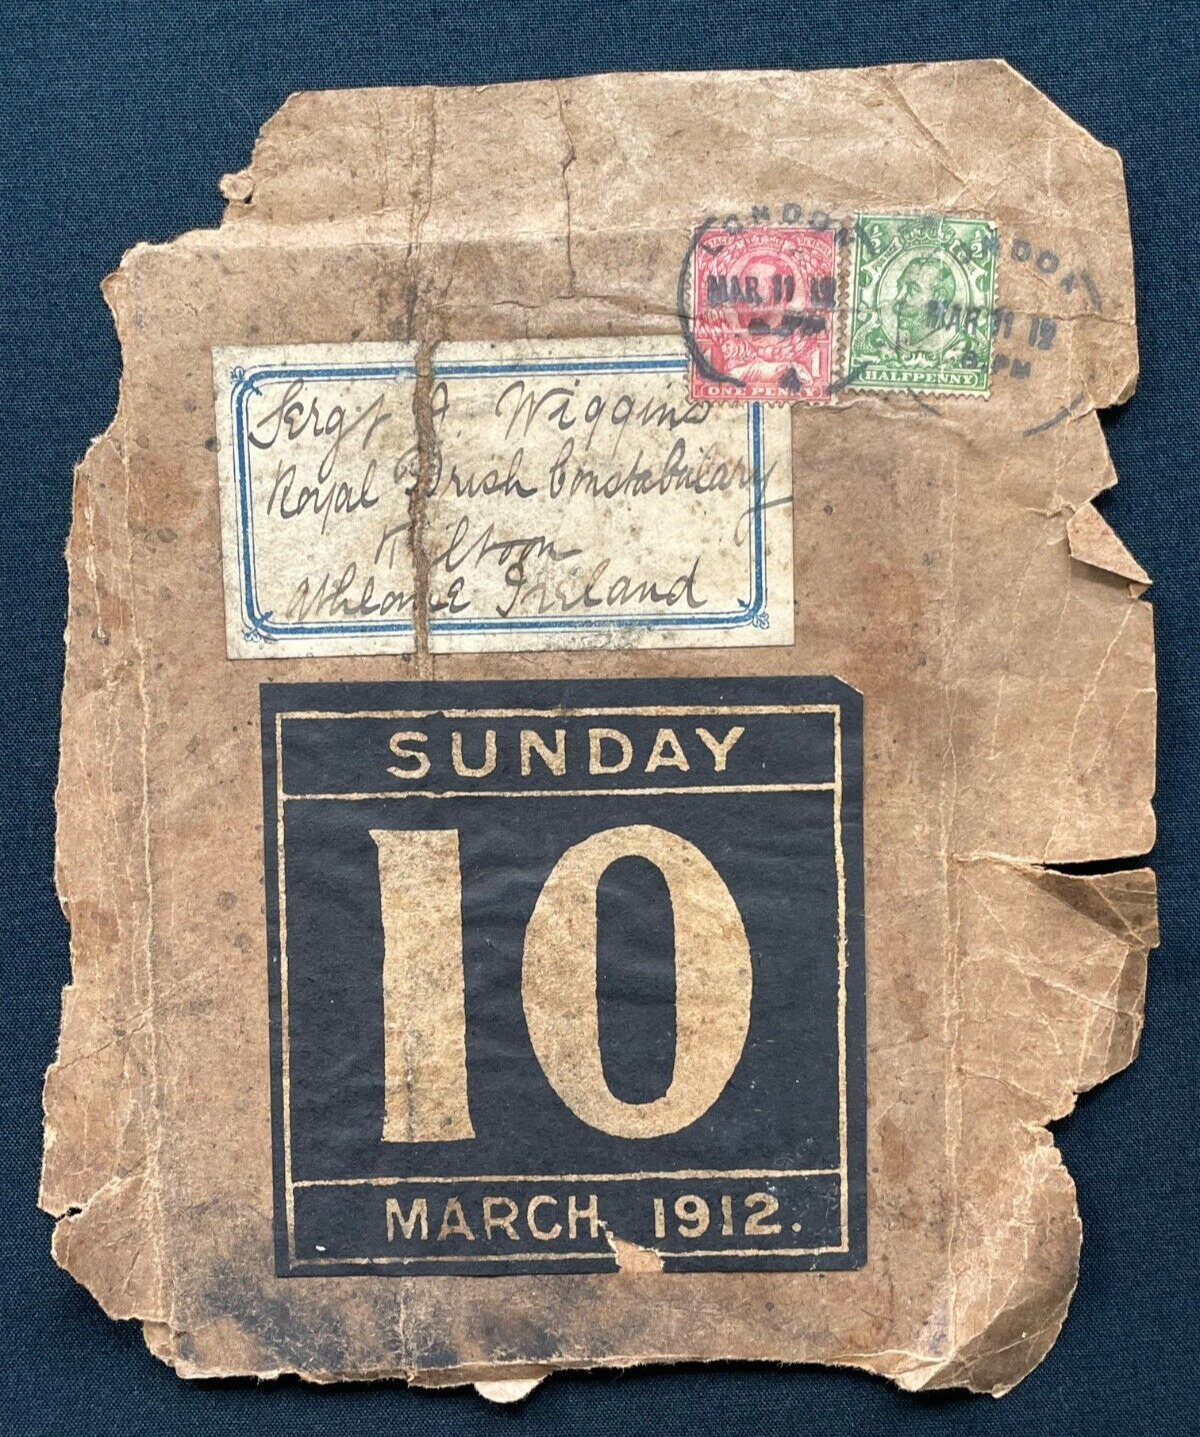 1912 Postal Fragment, Sgt. J. Wiggins, Royal Irish Constabulary, Kiltoom Athlone